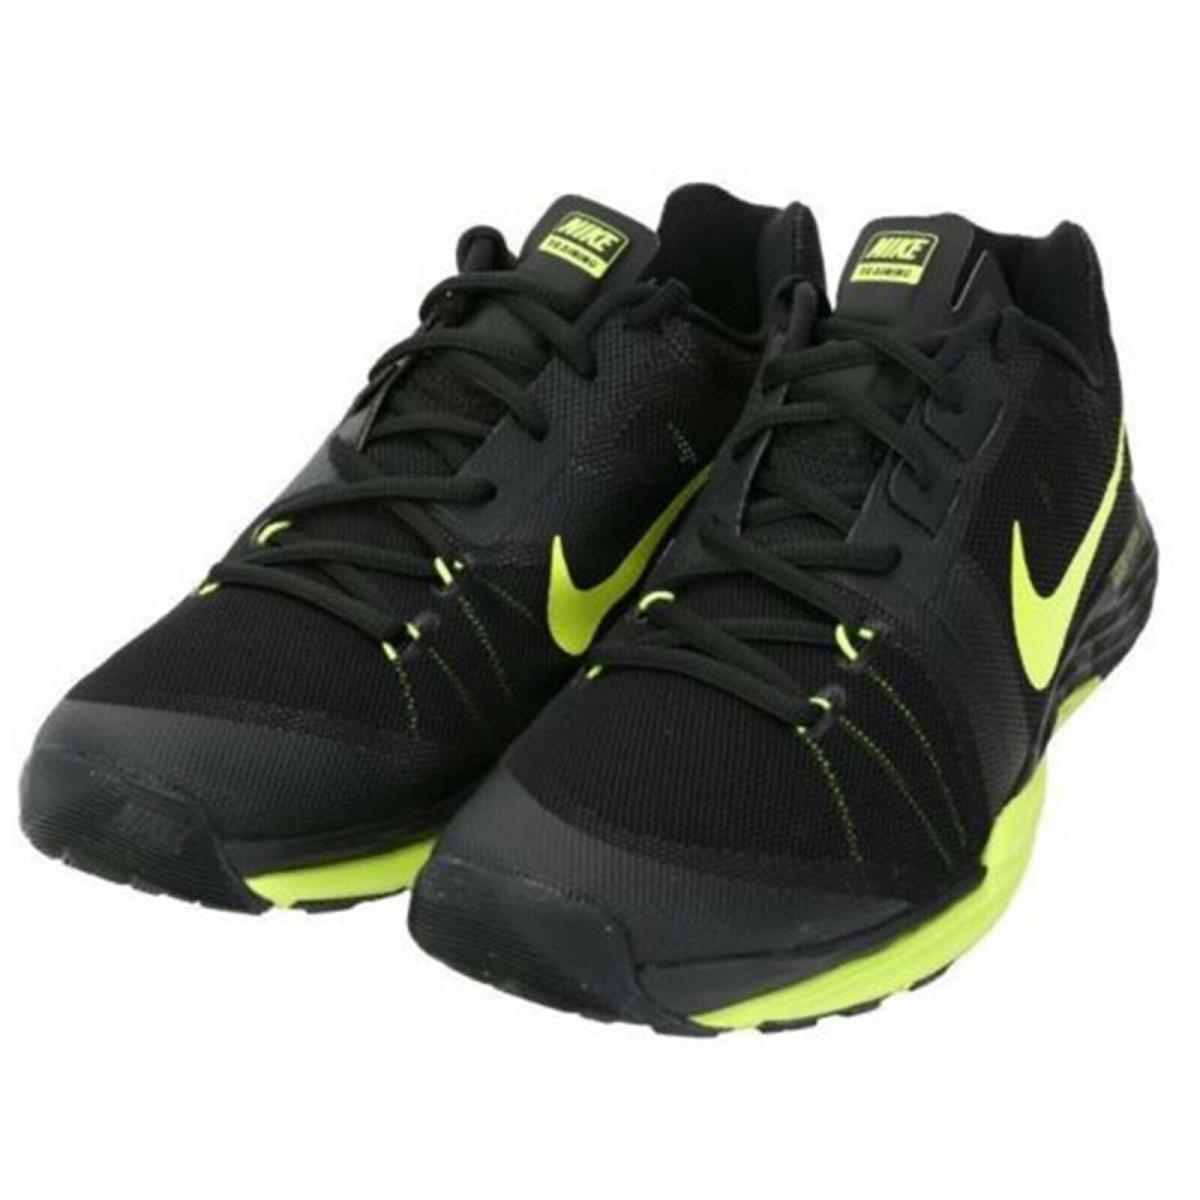 Voorstad Huiskamer machine Nike Train Prime Iron DF <832219 - 008> Men`s Training Shoes.new with Box |  - Nike shoes TRAIN PRIME IRON - BLACK/VOLT-COOL GREY , BLACK/VOLT-COOL GREY  Manufacturer | SporTipTop